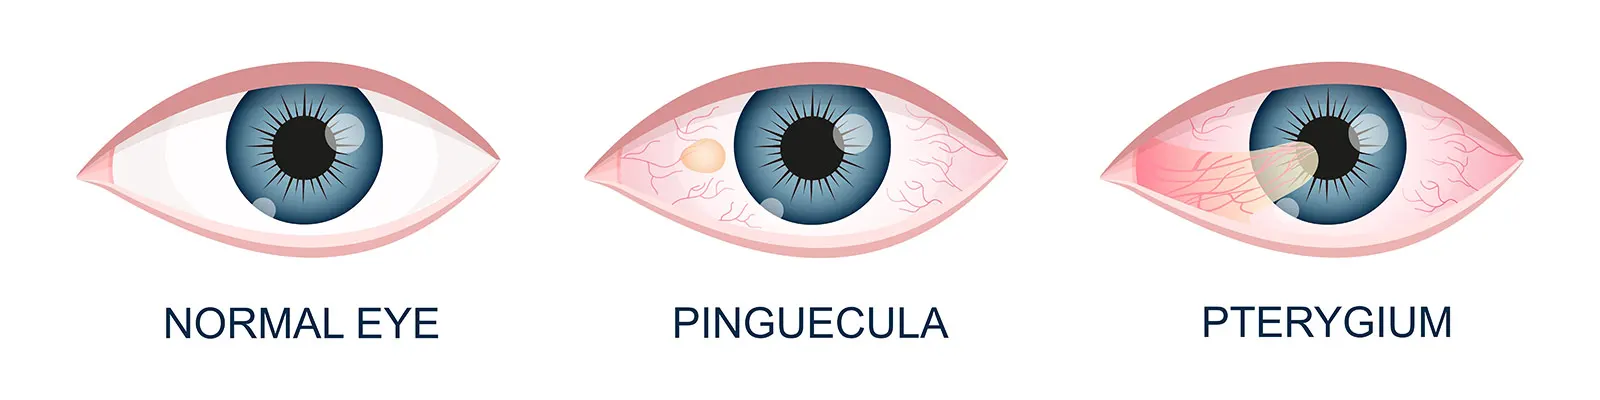 normal eye vs pinguecula and pterygium